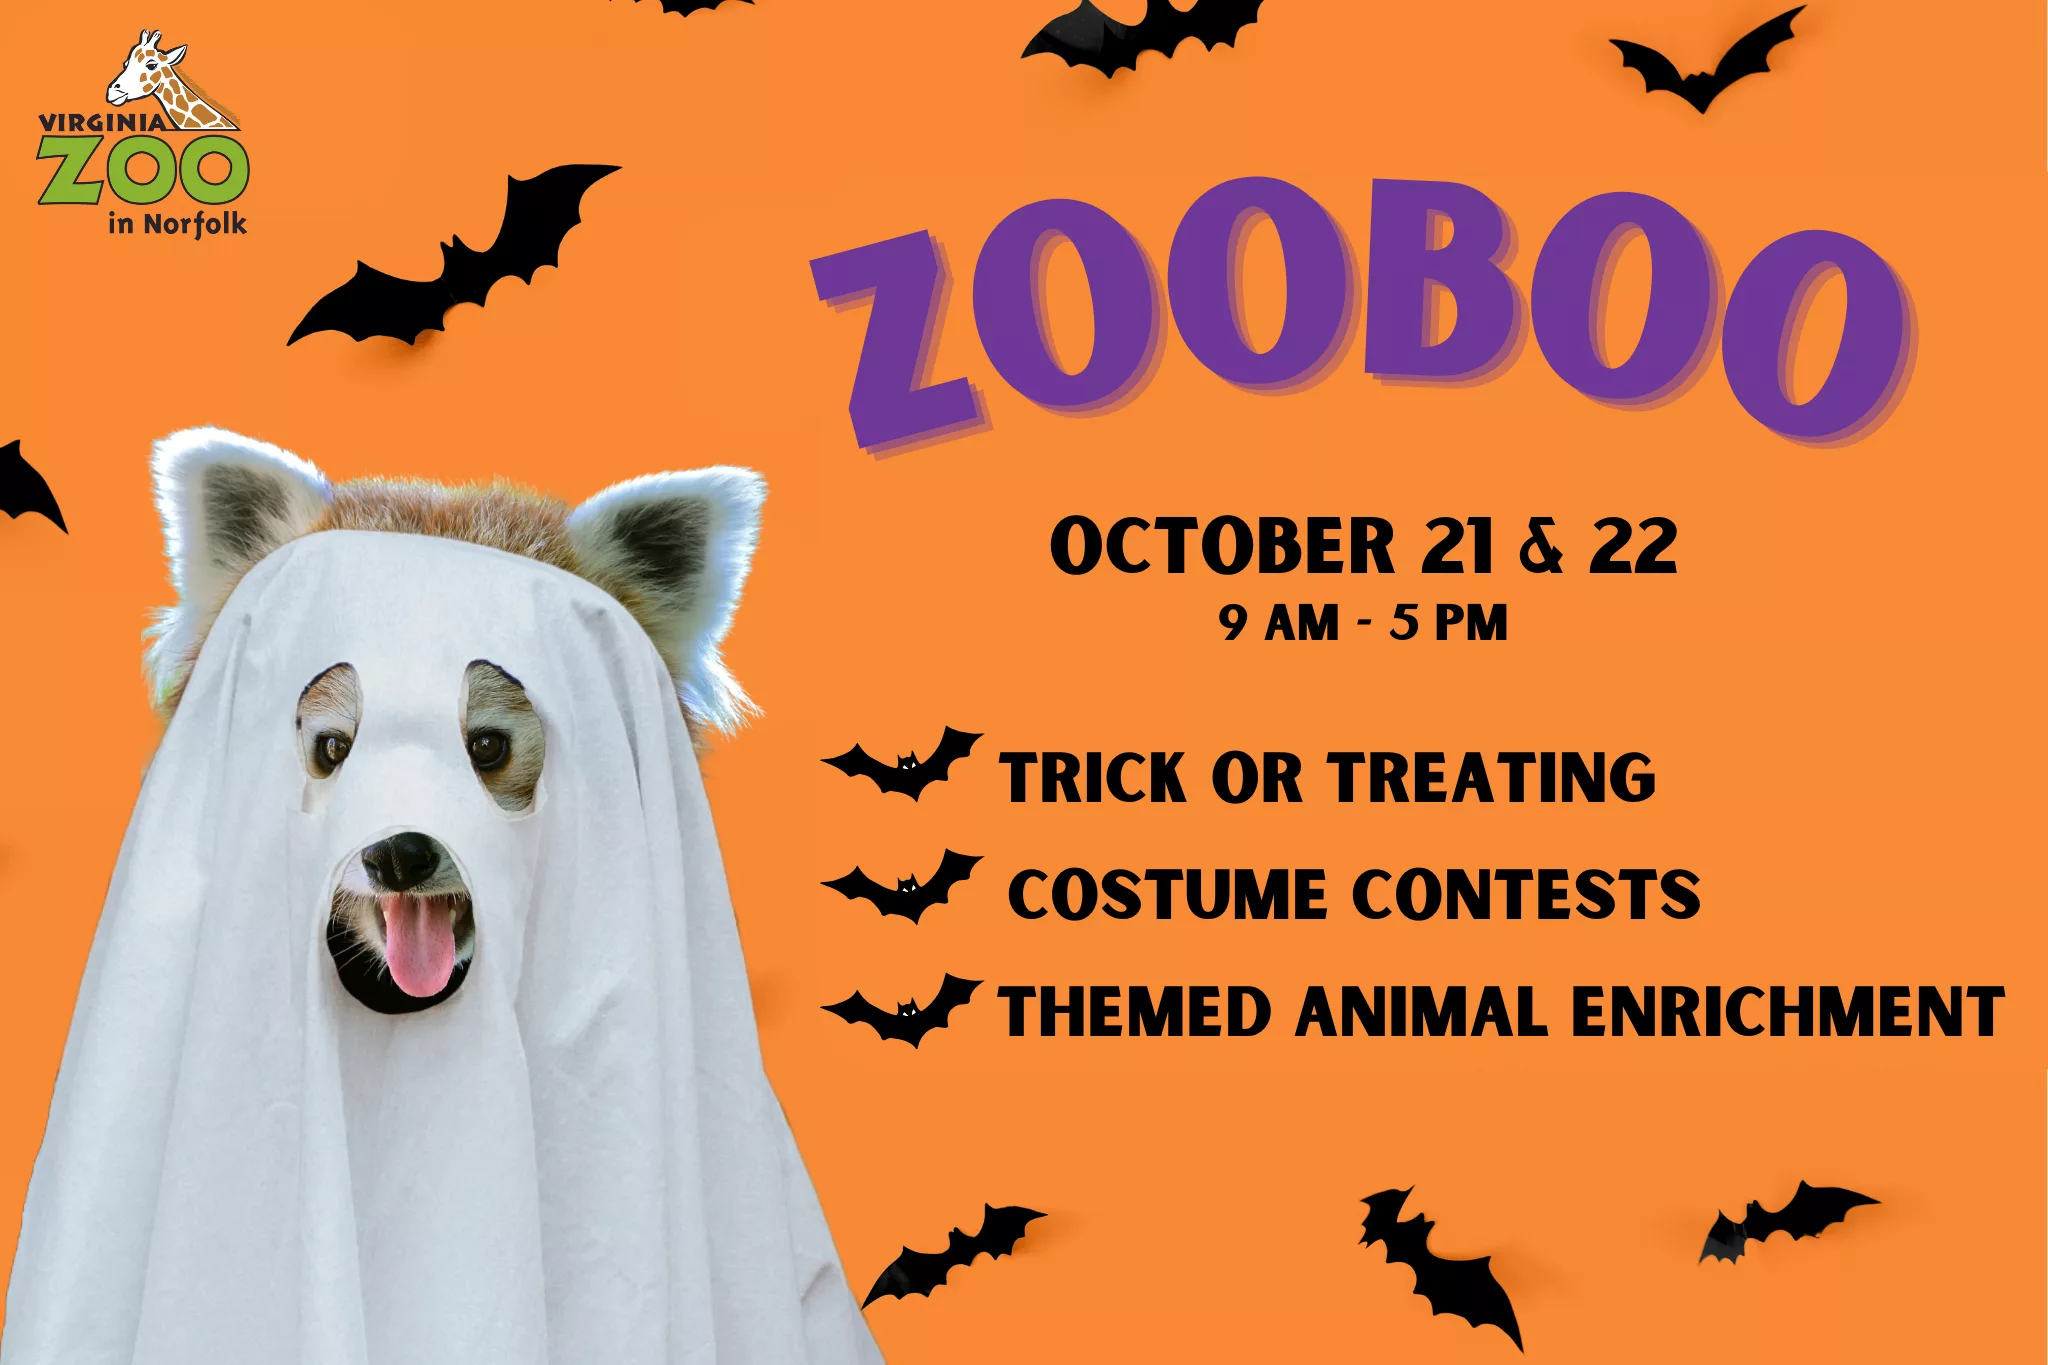 Virginia Zoo seeks vendors for Halloween events